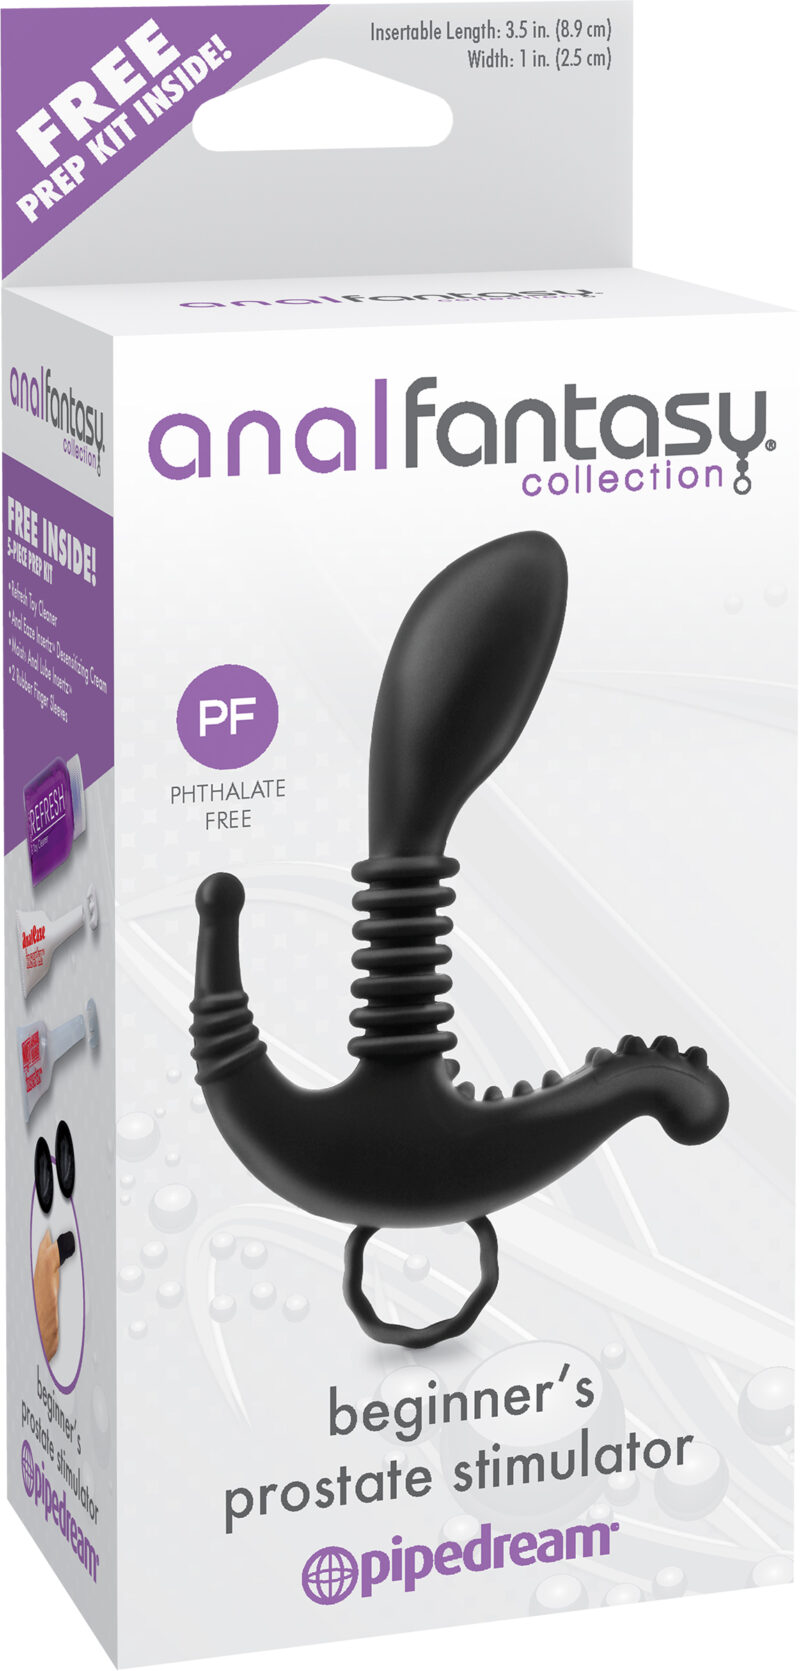 Pipedream Anal Fantasy Beginner's Prostate Stimulator